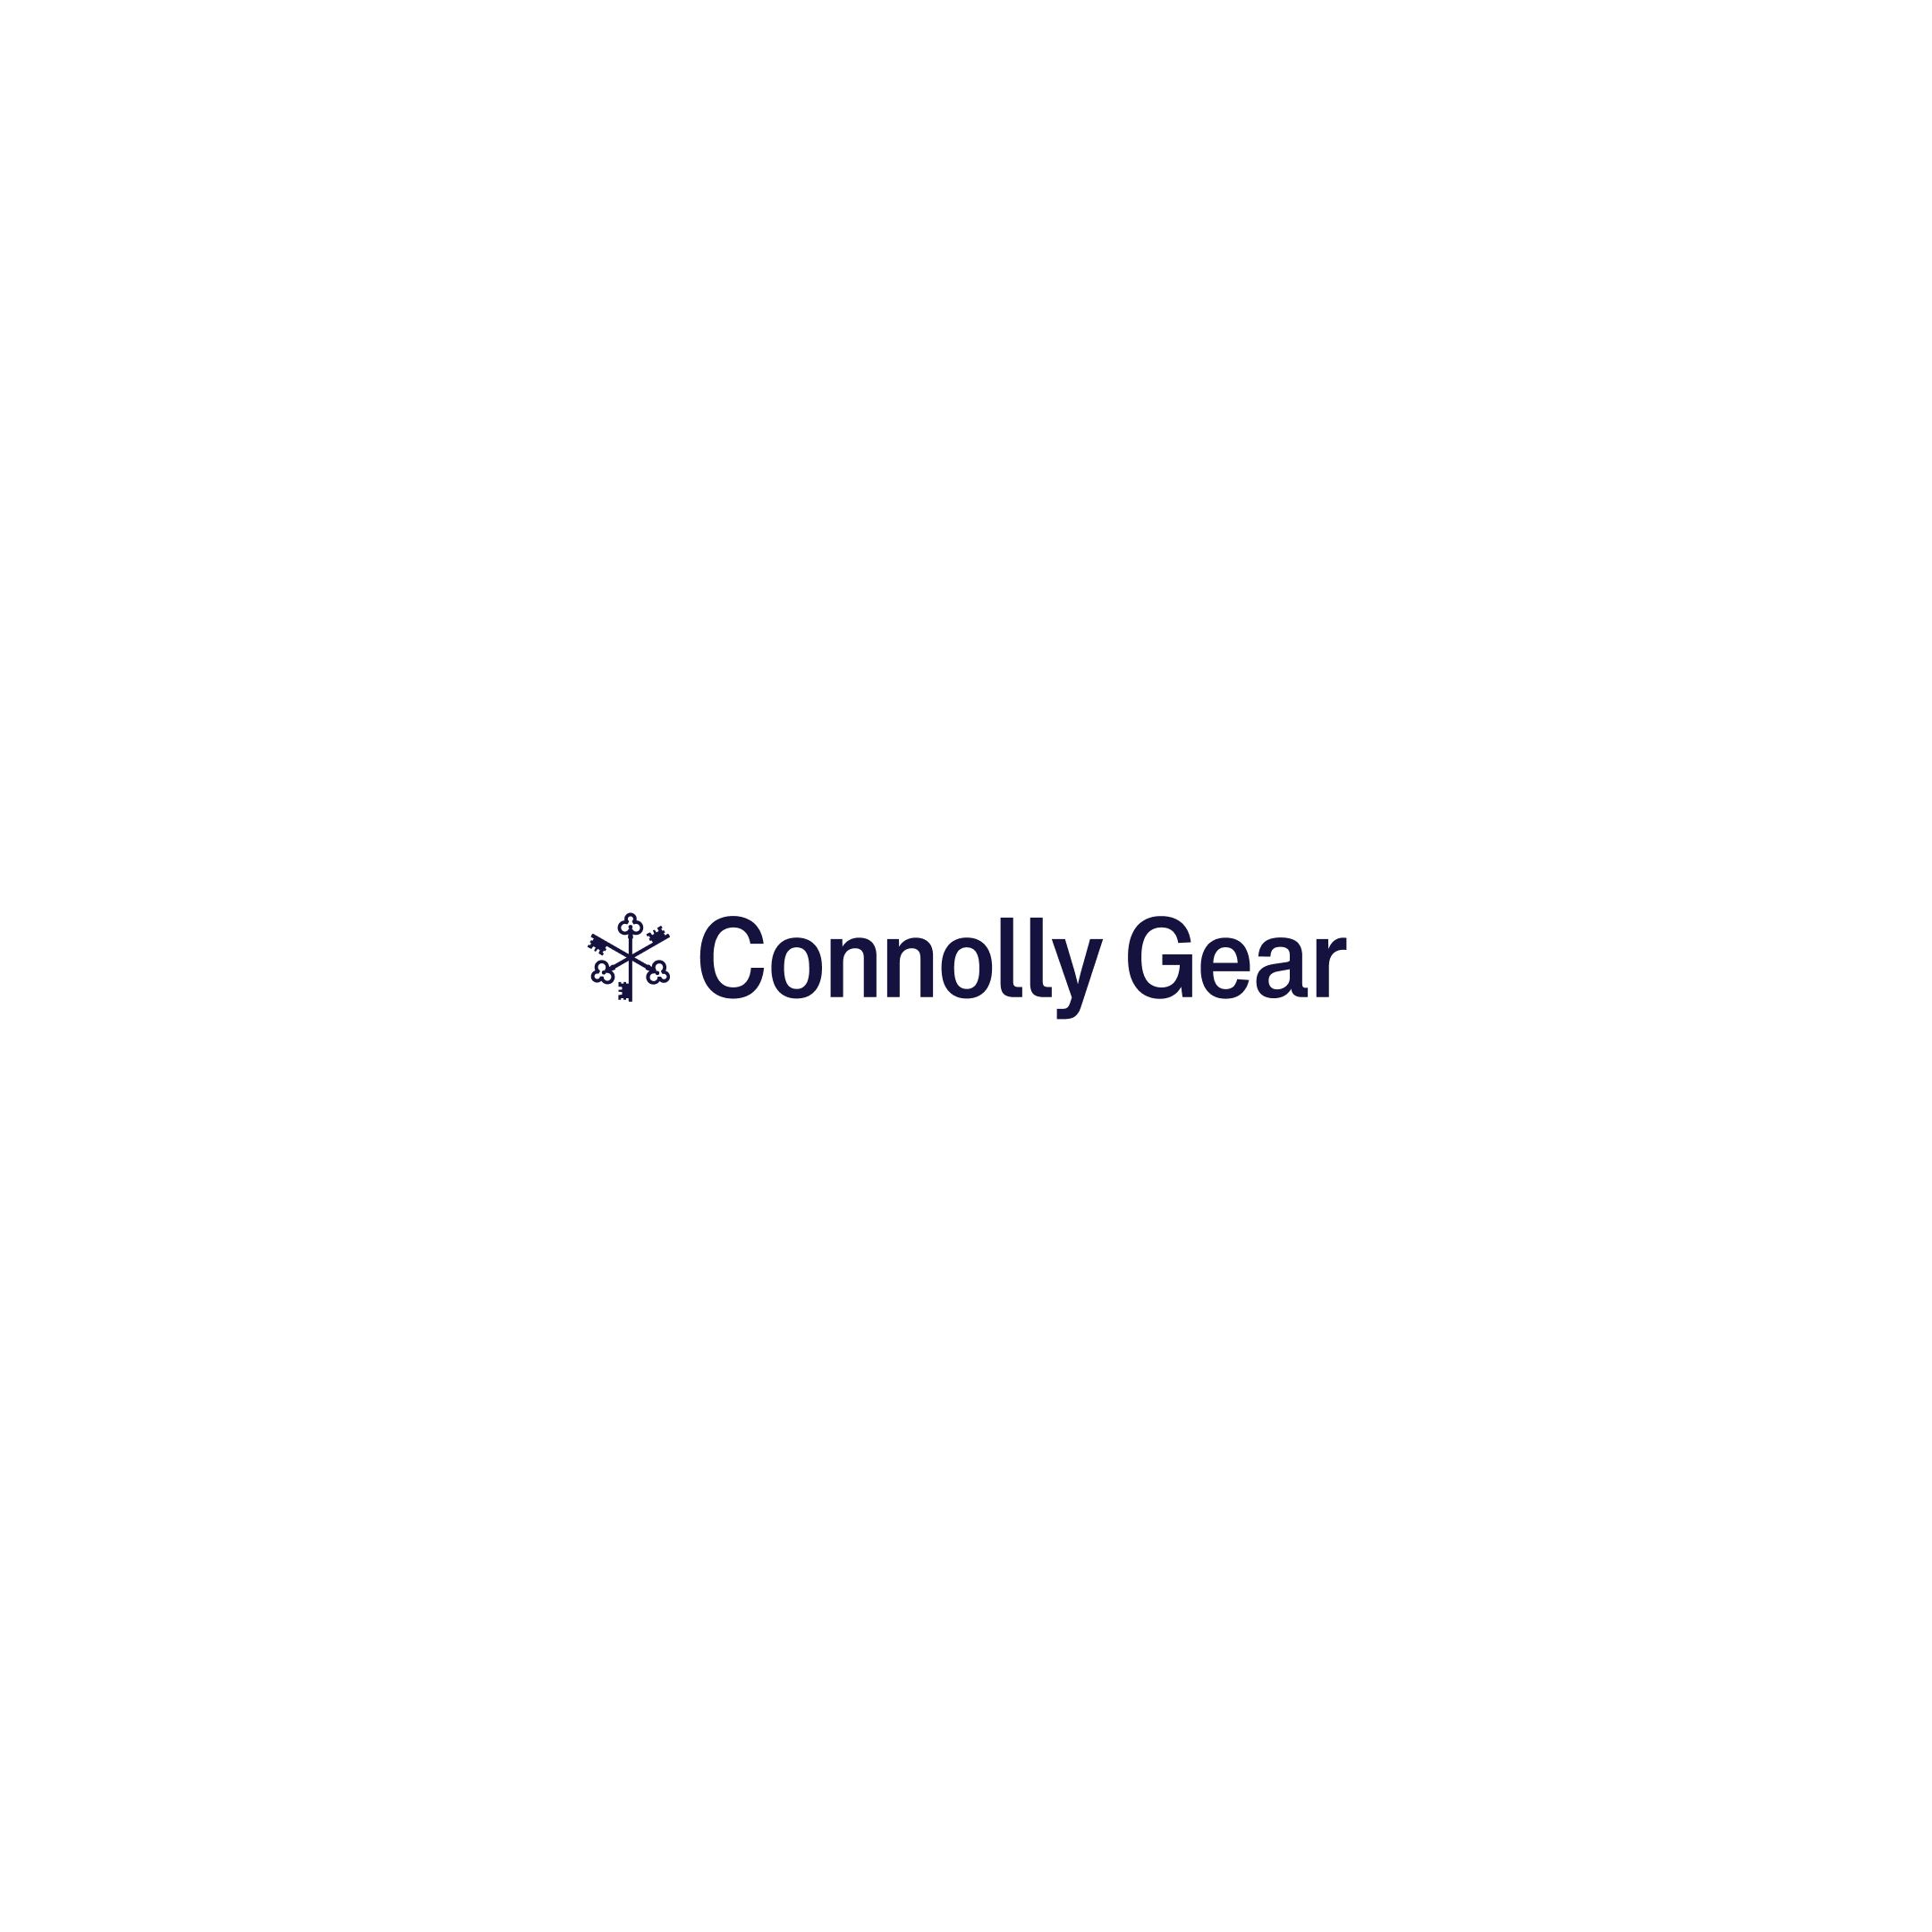 Connolly Gear Case Study 1